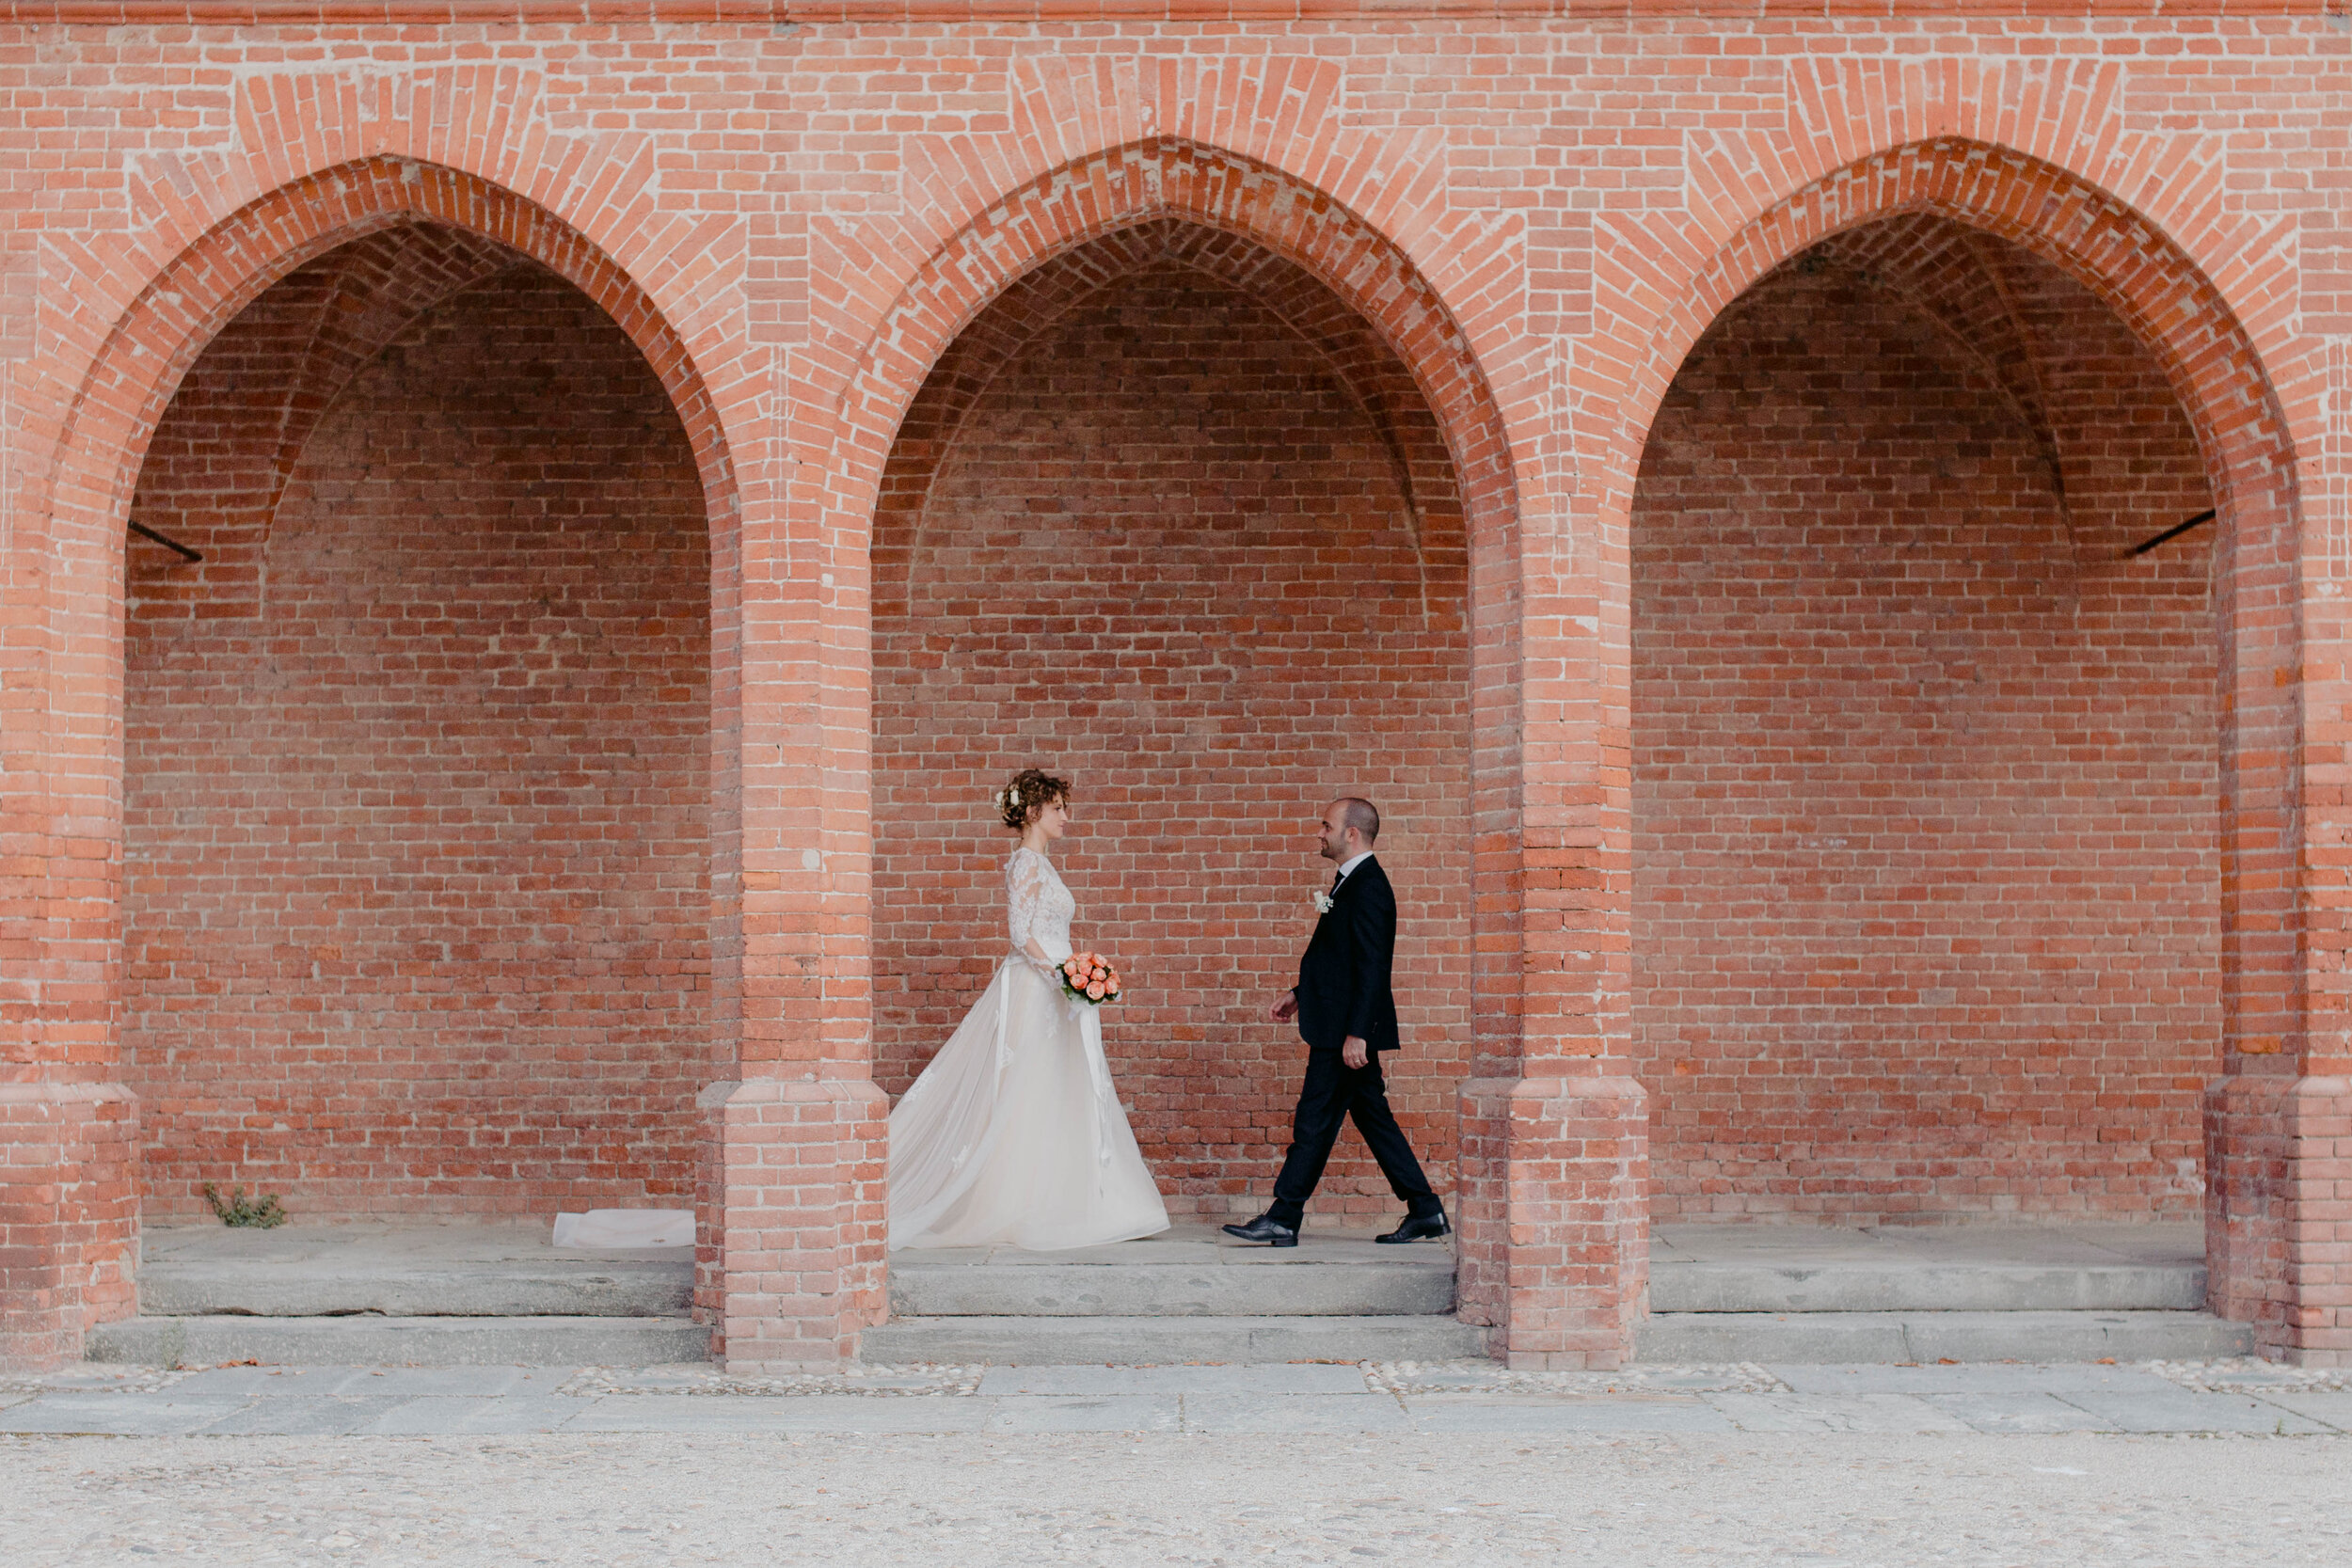 035 - matrimonio a Pollenzo - Miriam Callegari Fotografa.JPG